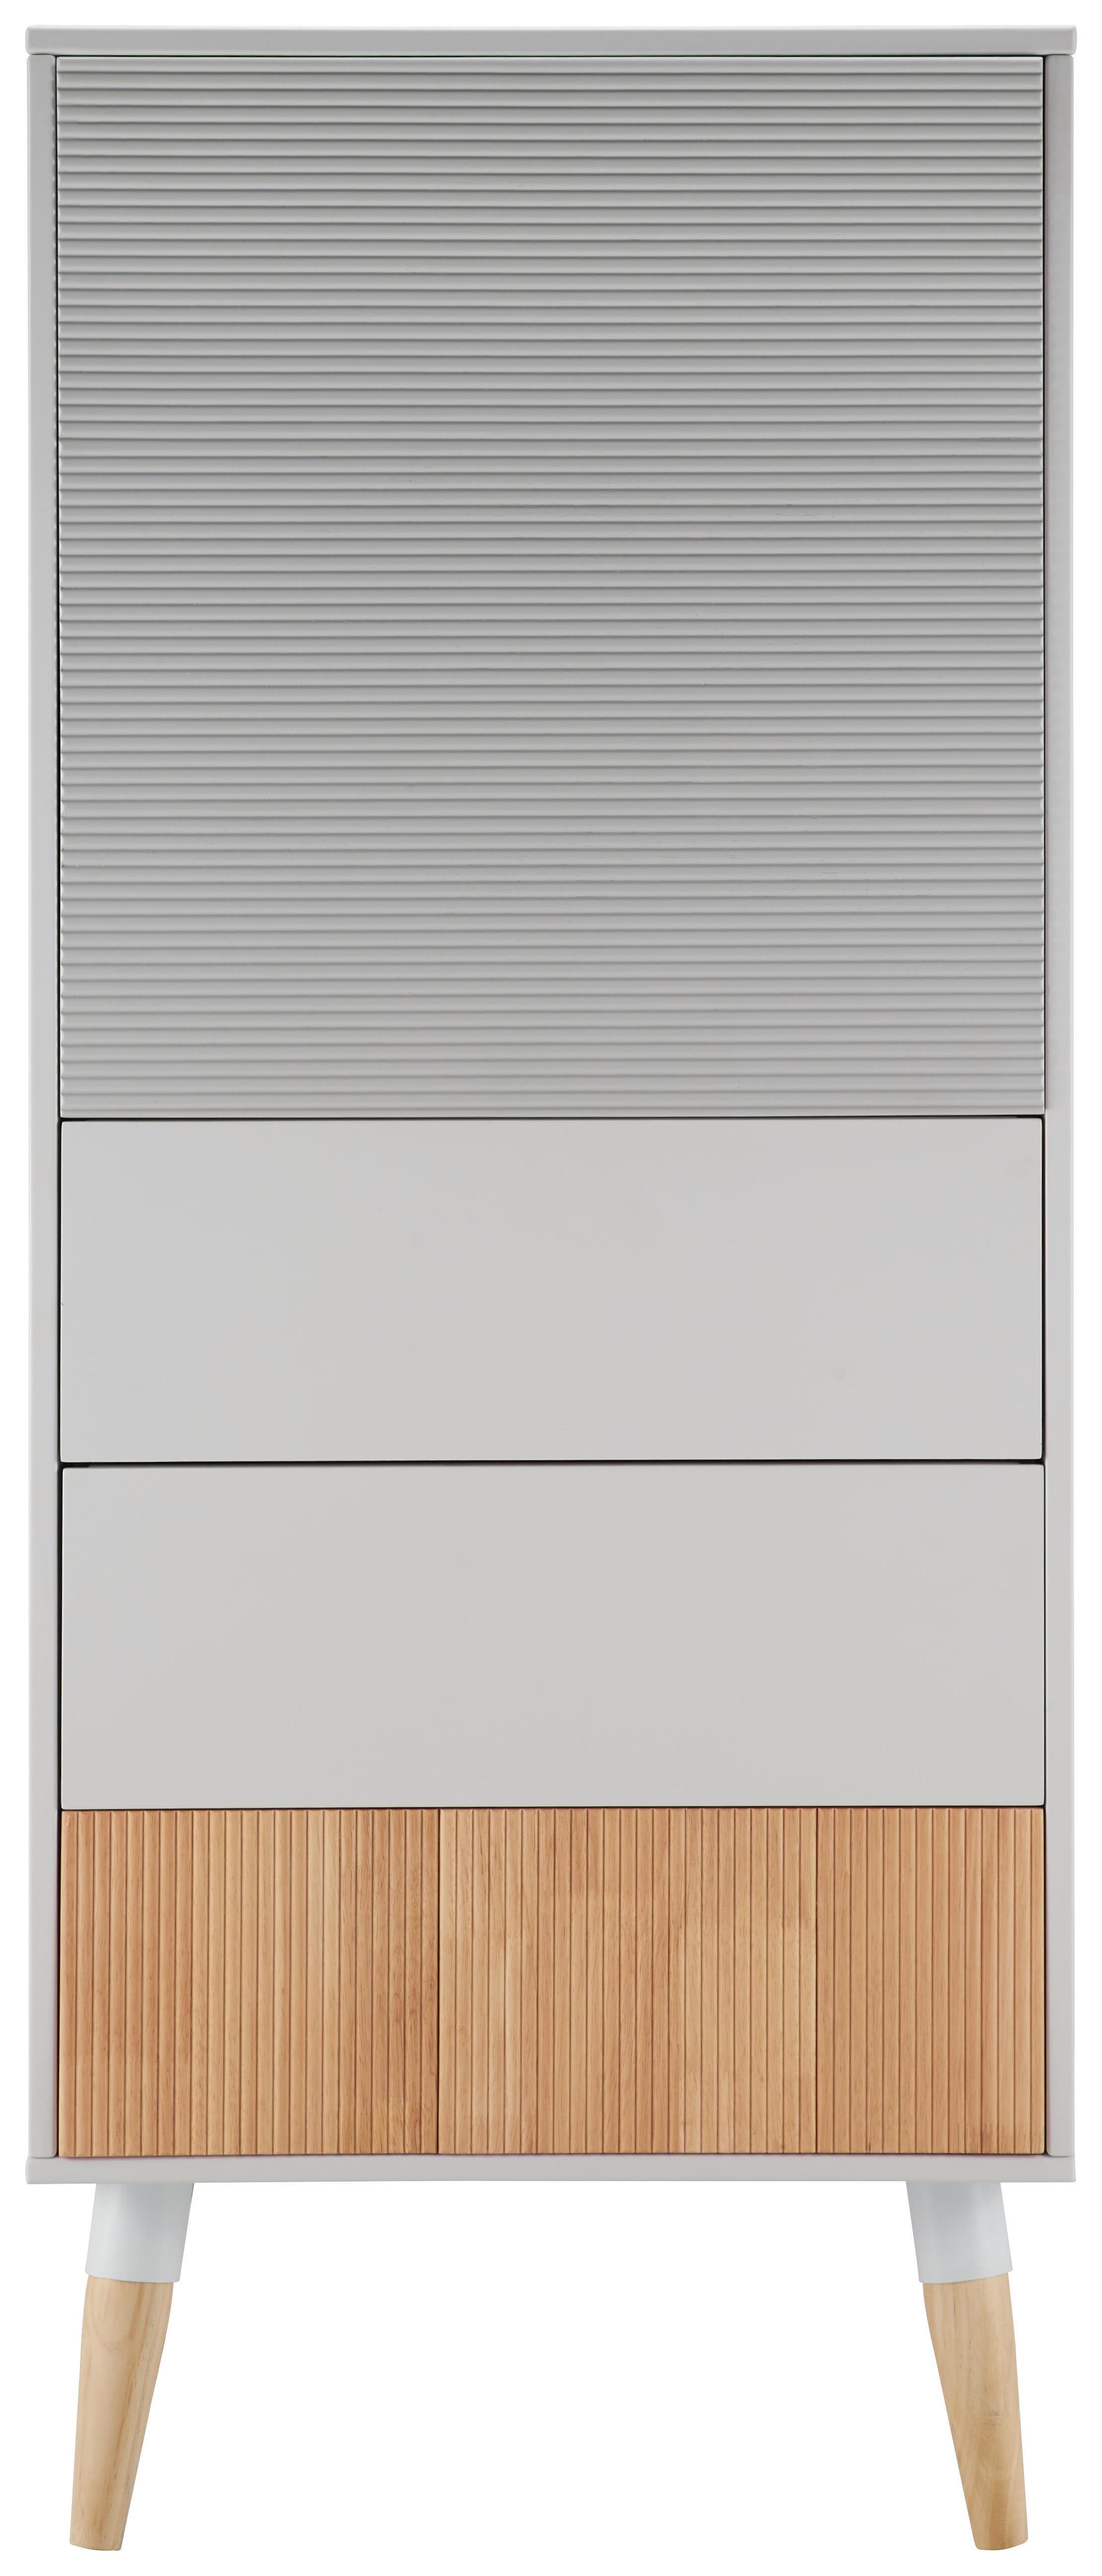 Kommode "Evlyn", weiß, grau, natur - Hellgrau/Grau, MODERN, Holz/Metall (55/136/45cm) - Bessagi Home